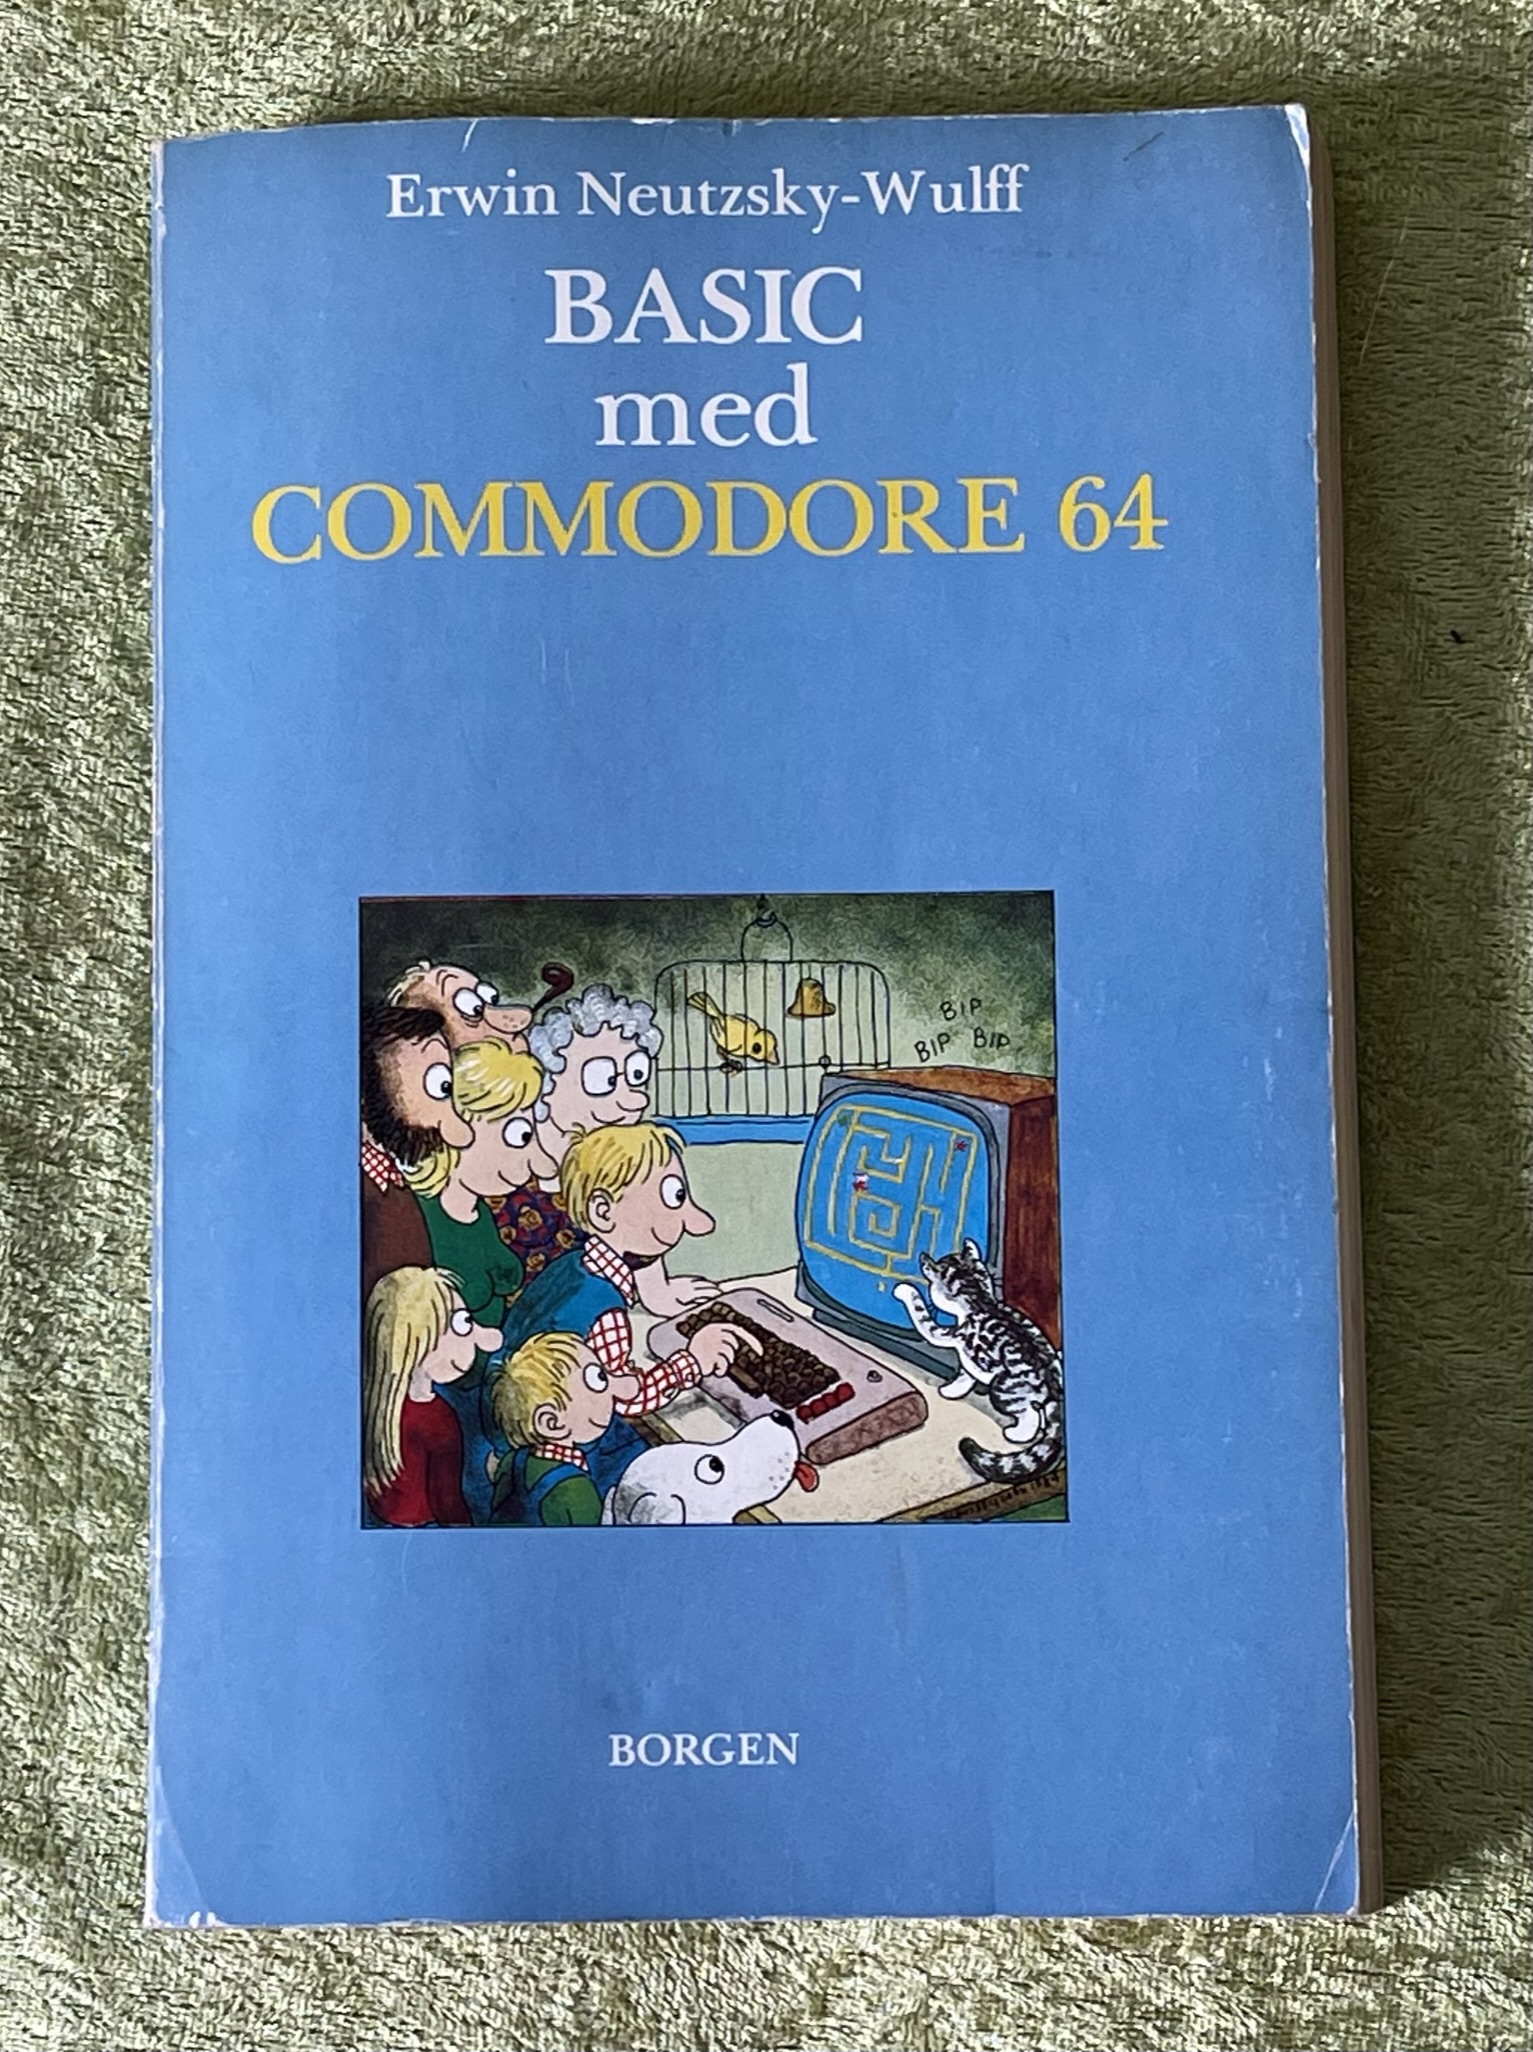 Basic Whit Commodore 64